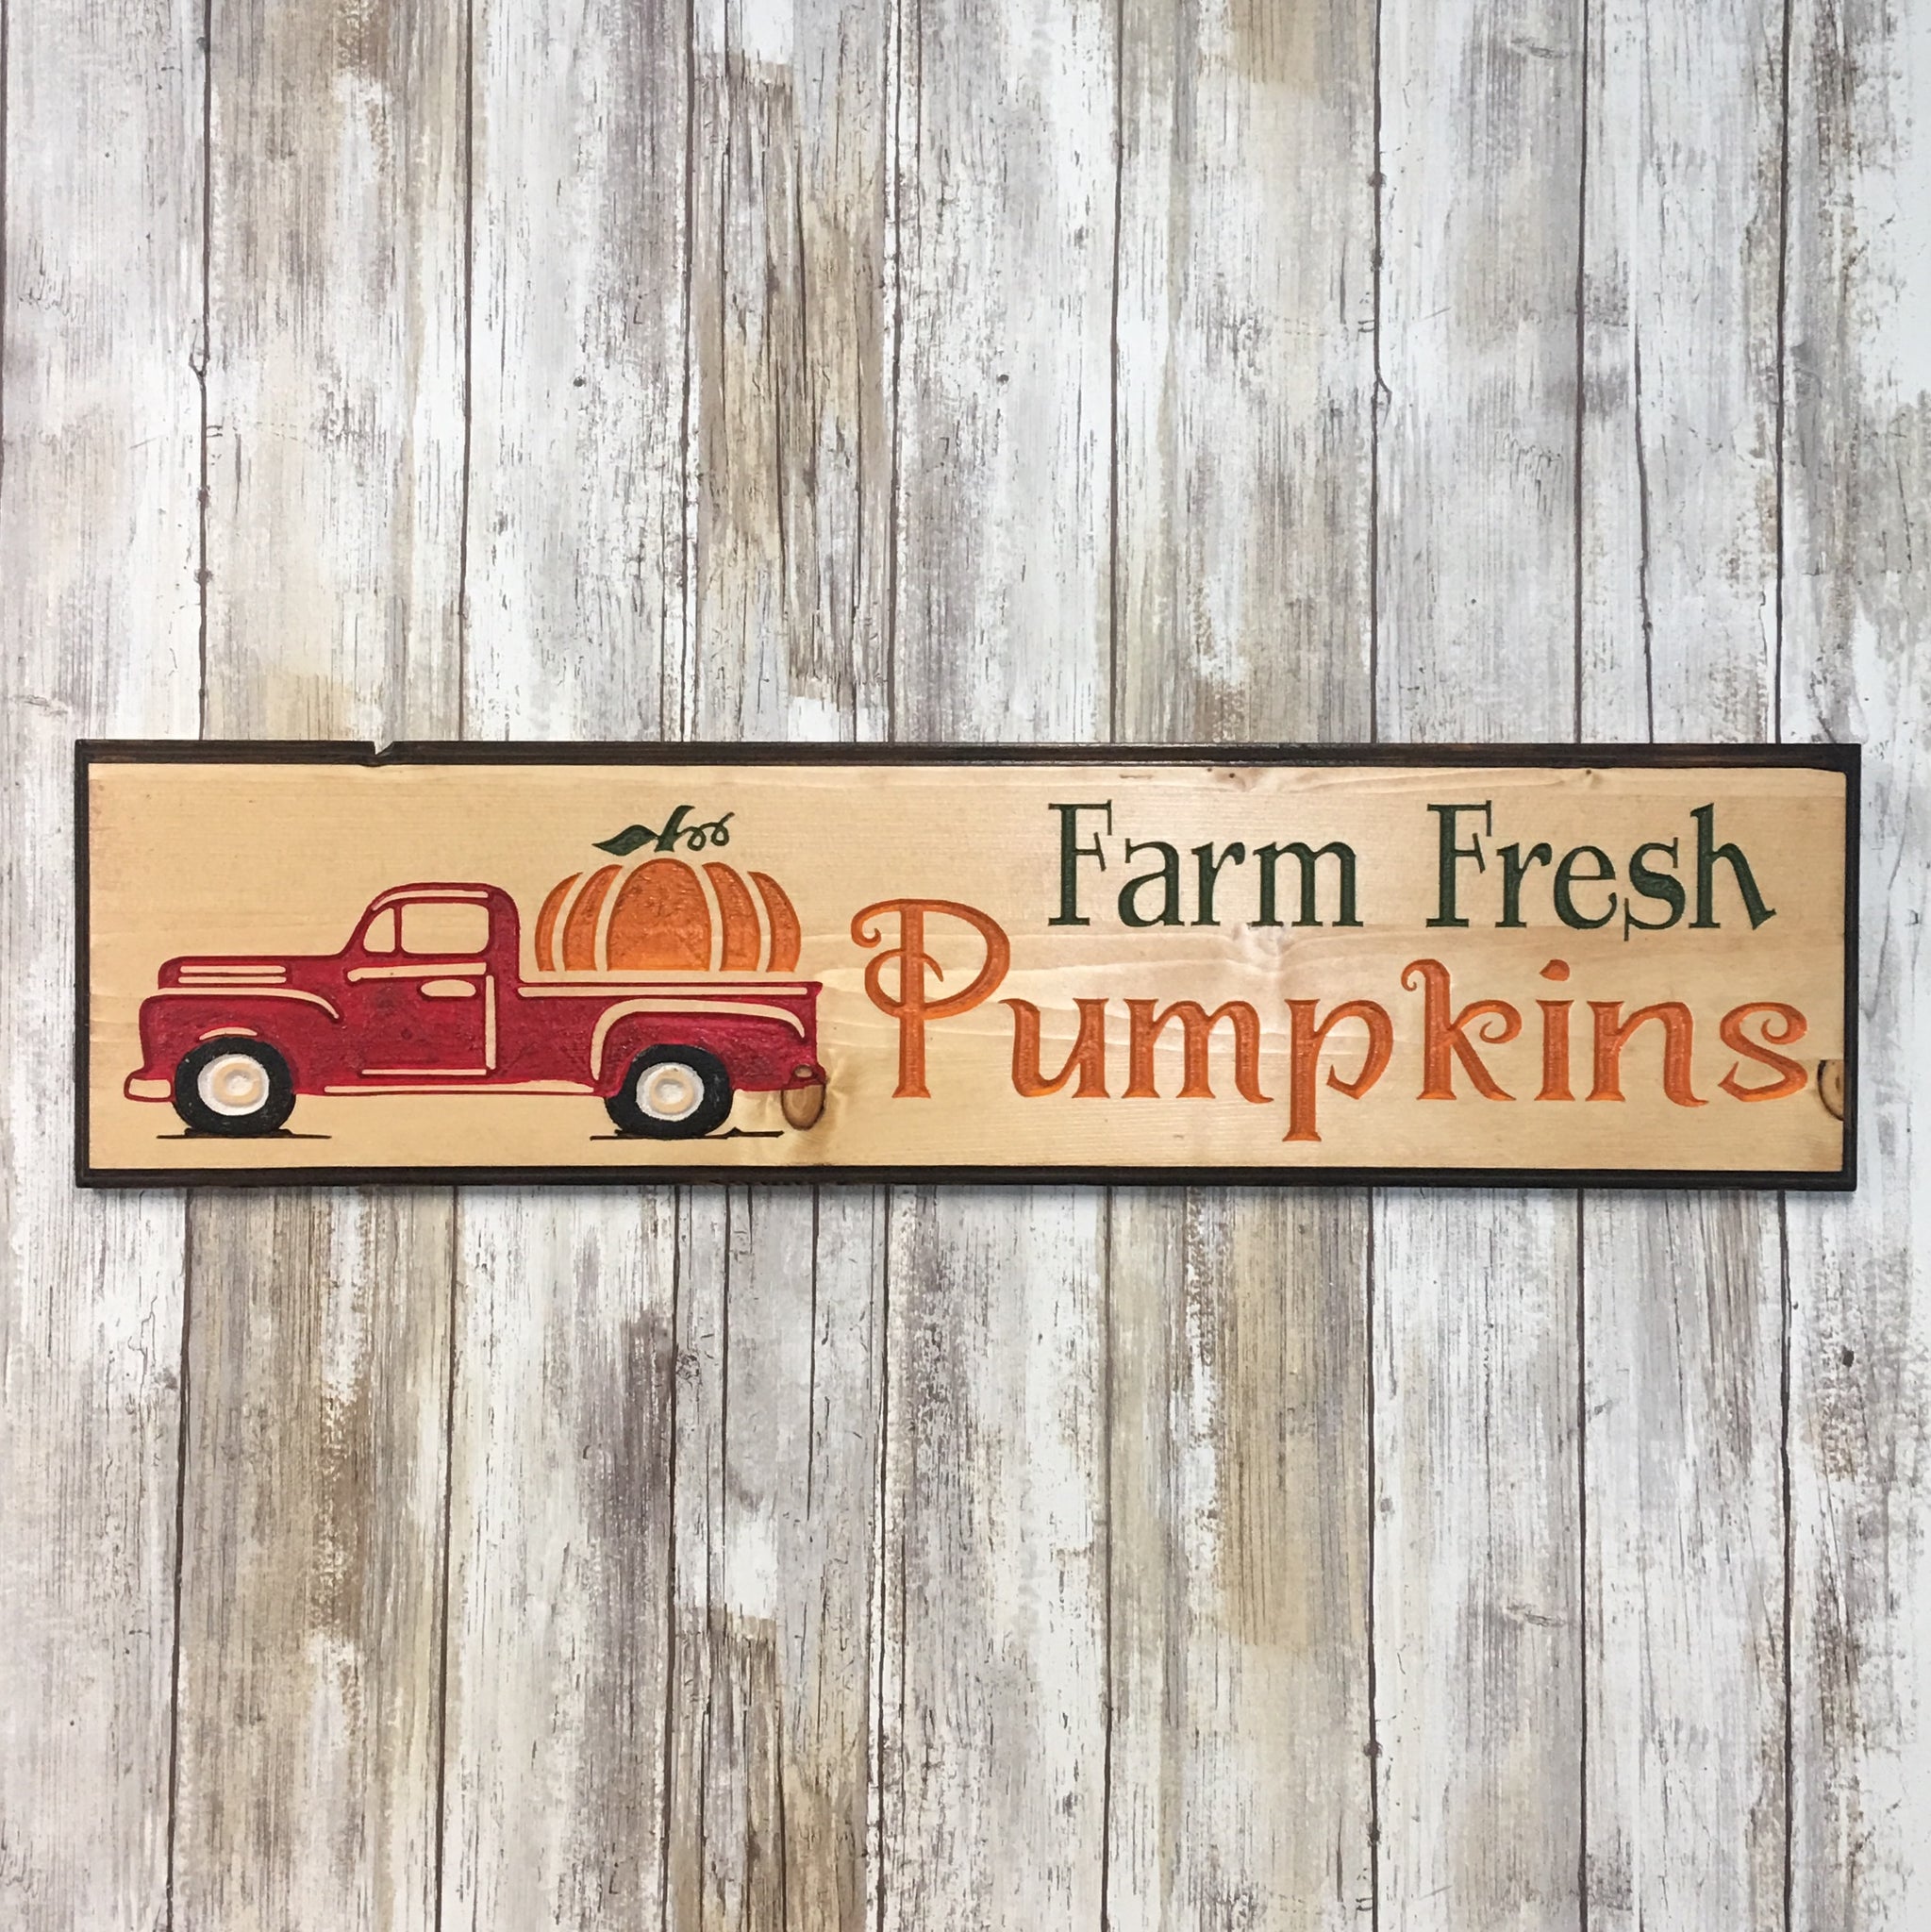 Farm Fresh Pumpkins - Autumn Halloween Sign - Carved Pine Wood